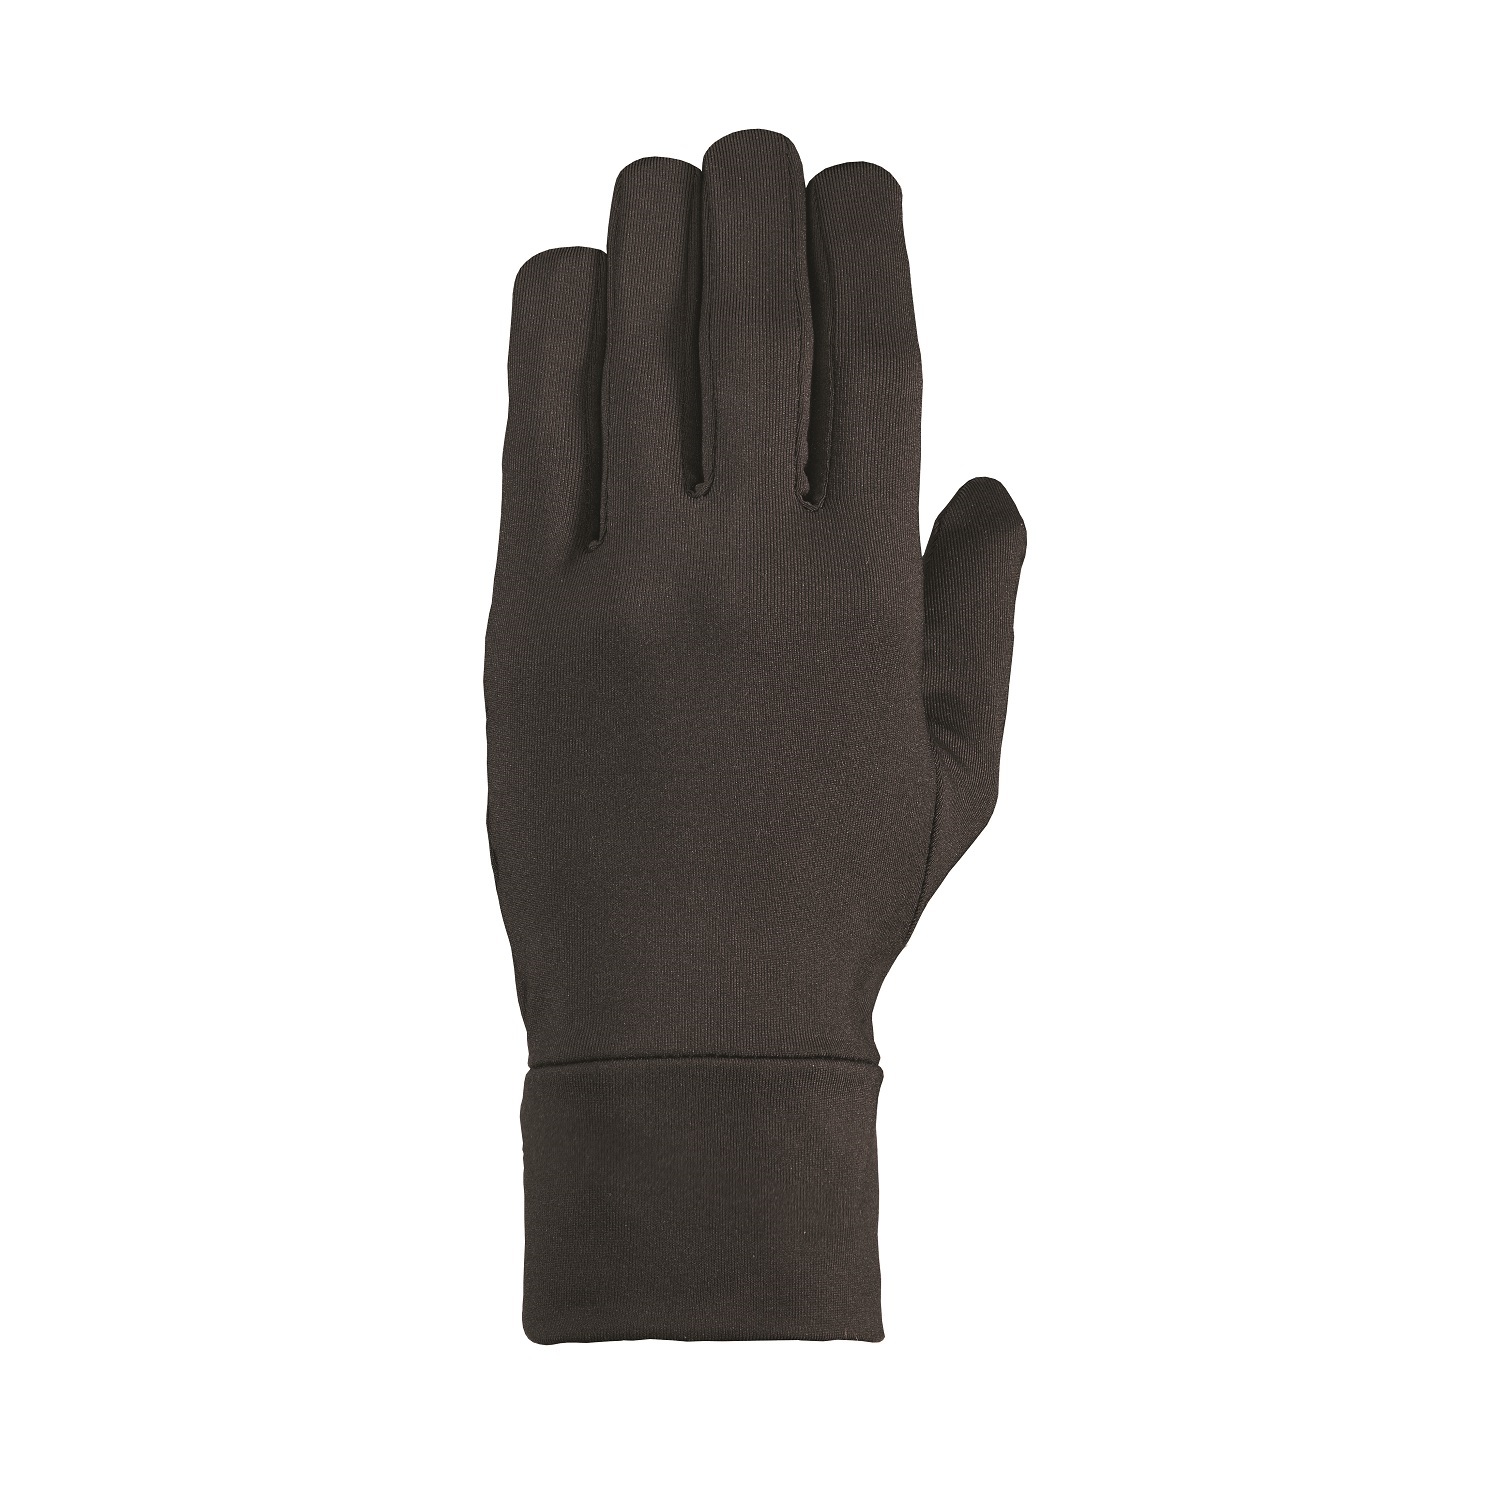 Seirus Hws Heatwave Glove Liner - Large/xlarge - 8134.0.0014